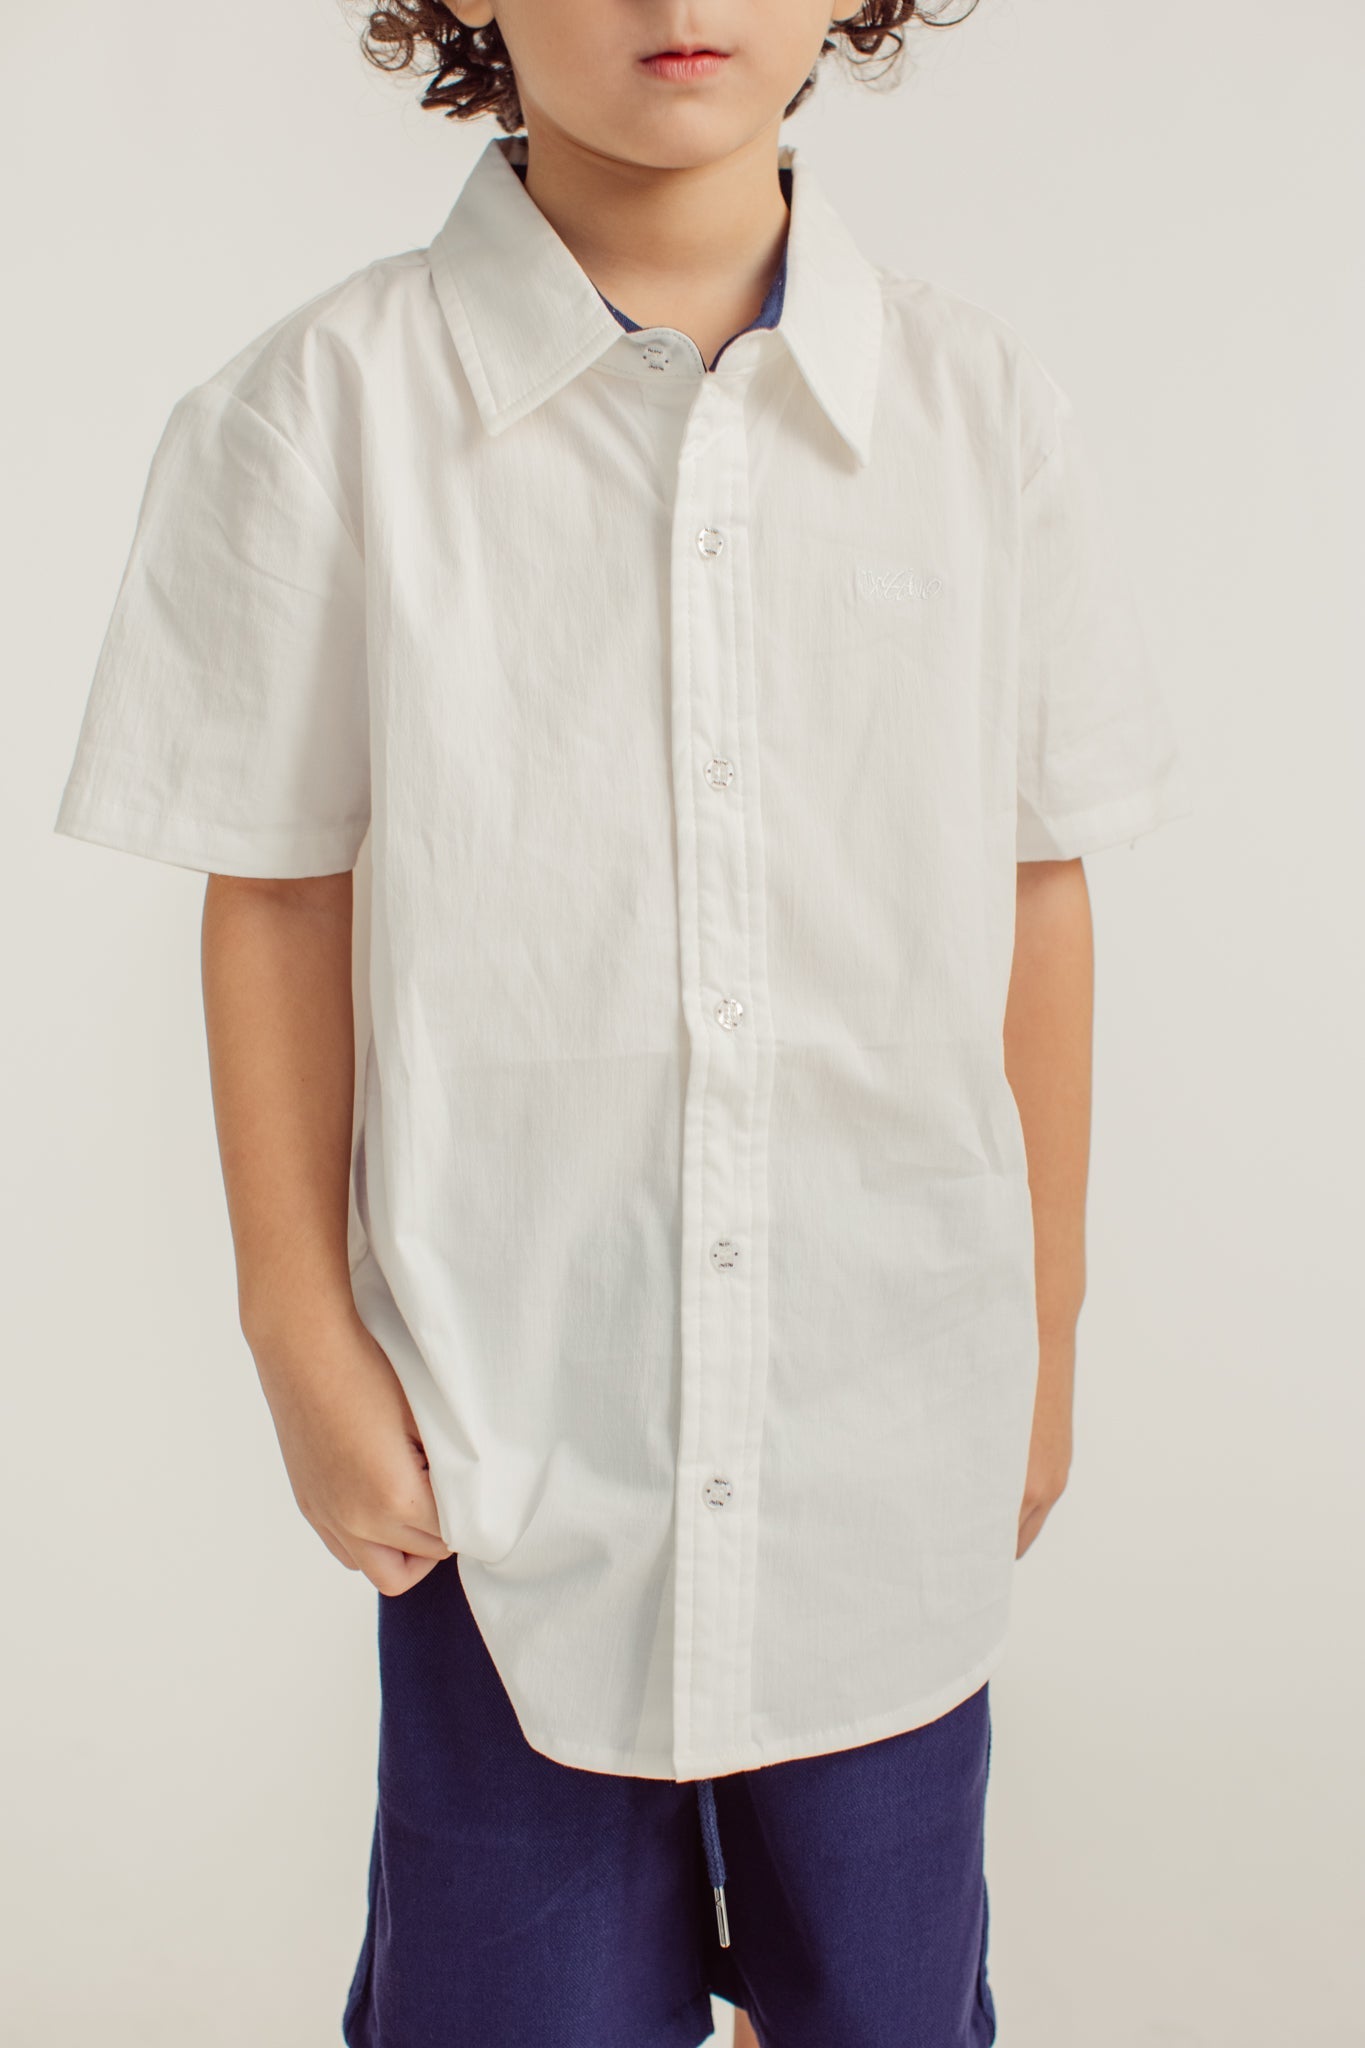 Mossimo Polo Short Sleeve Plain Shirt Kids Boys - Mossimo PH